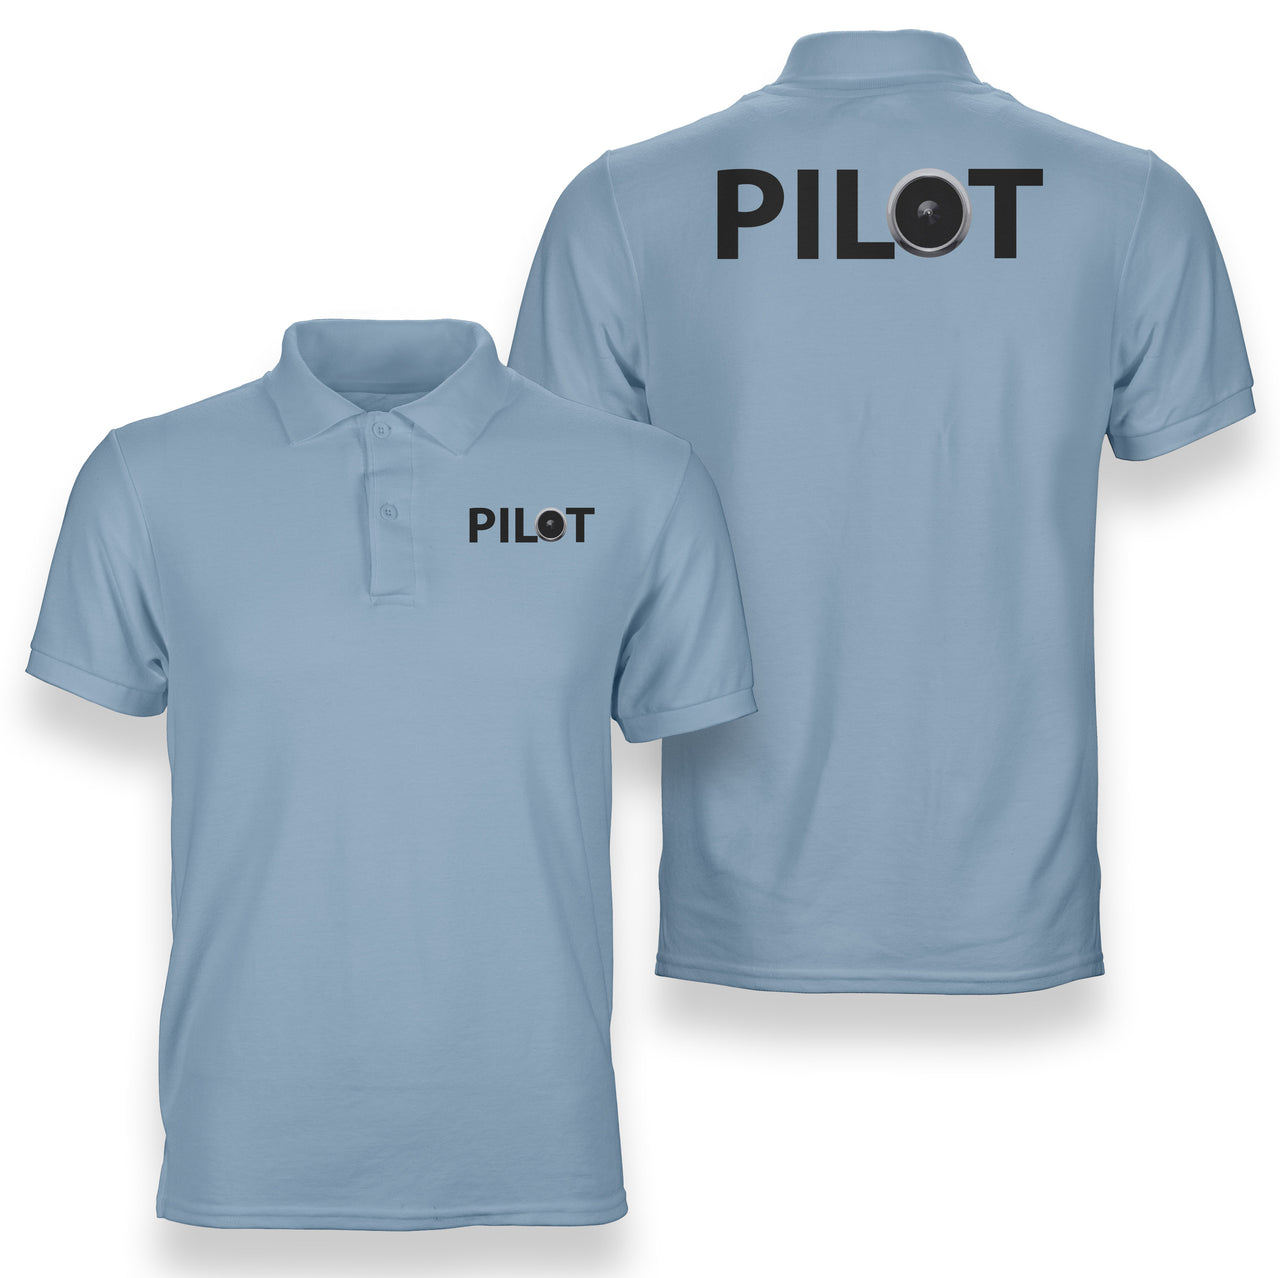 Pilot & Jet Engine Designed Double Side Polo T-Shirts